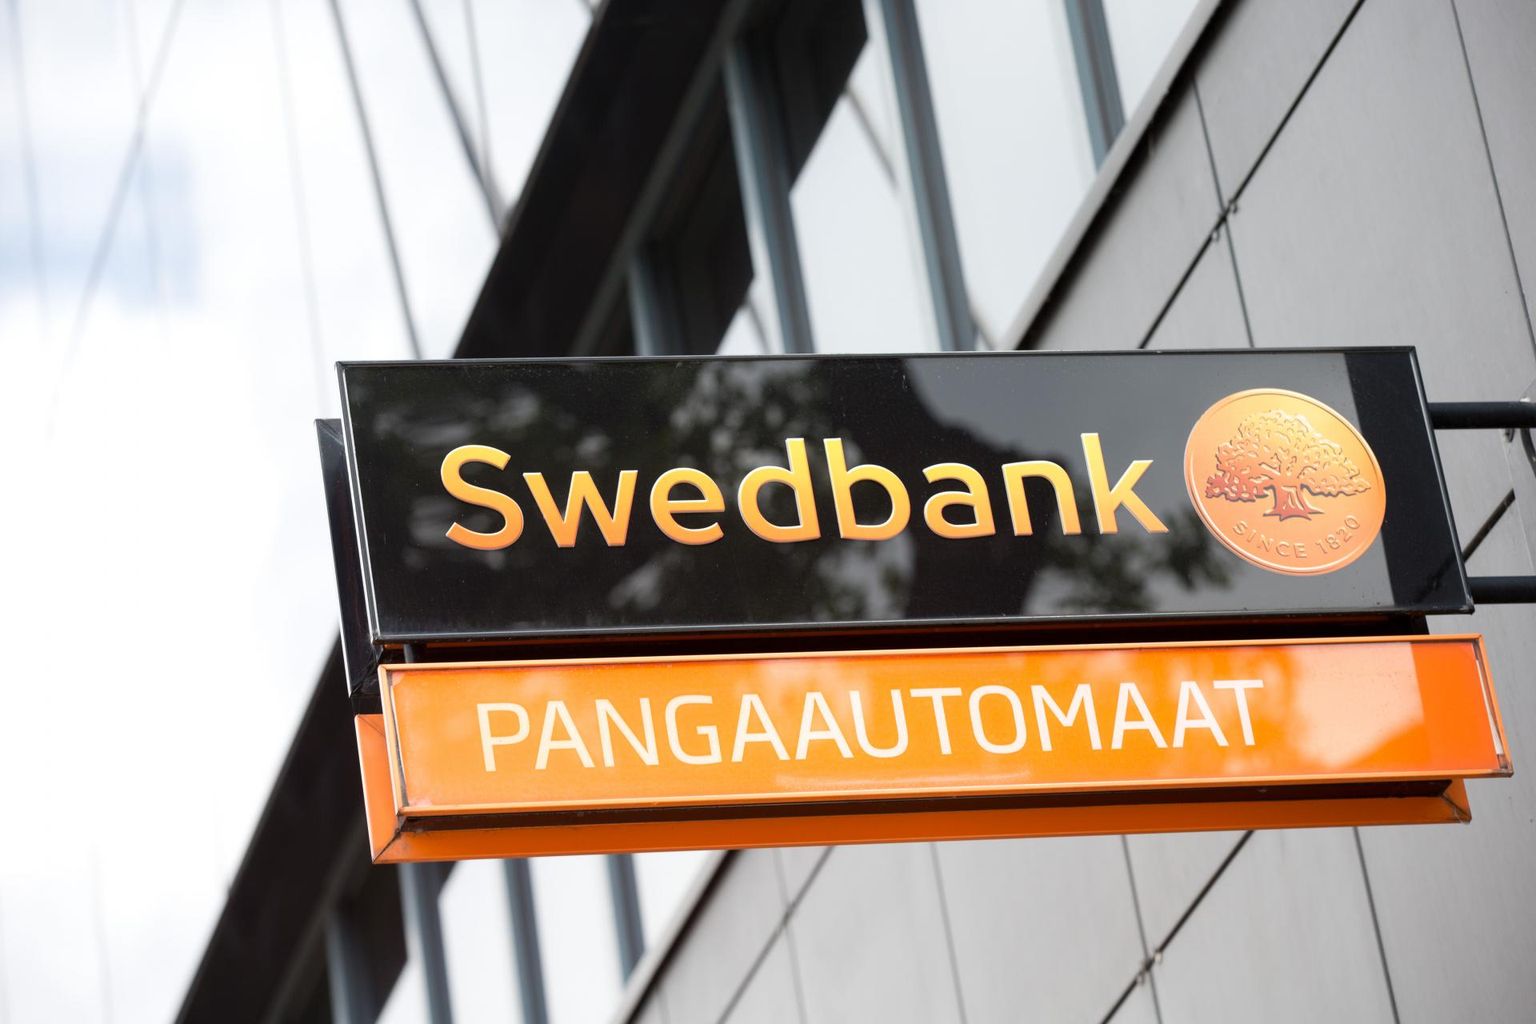 Swedbank. Иллюстративное фото.